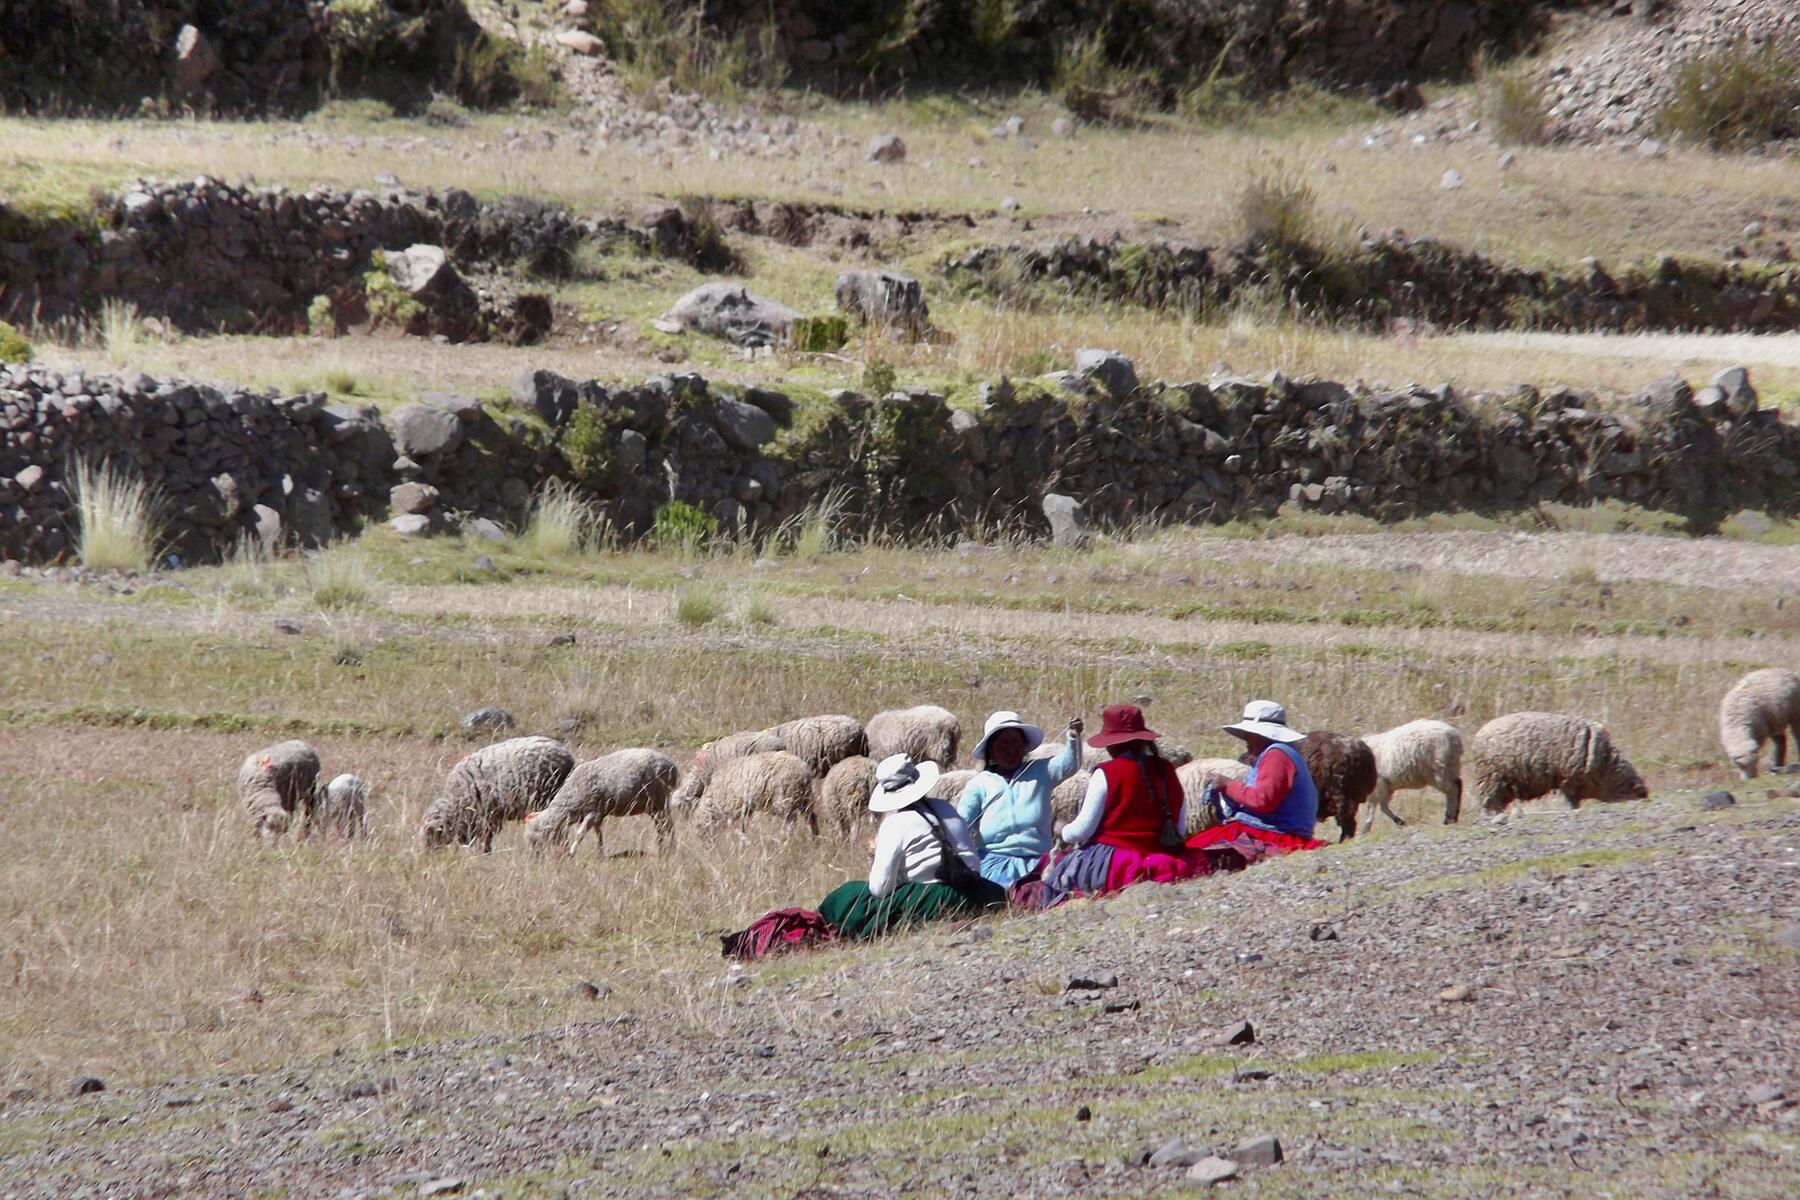 32 women knit while watching sheep